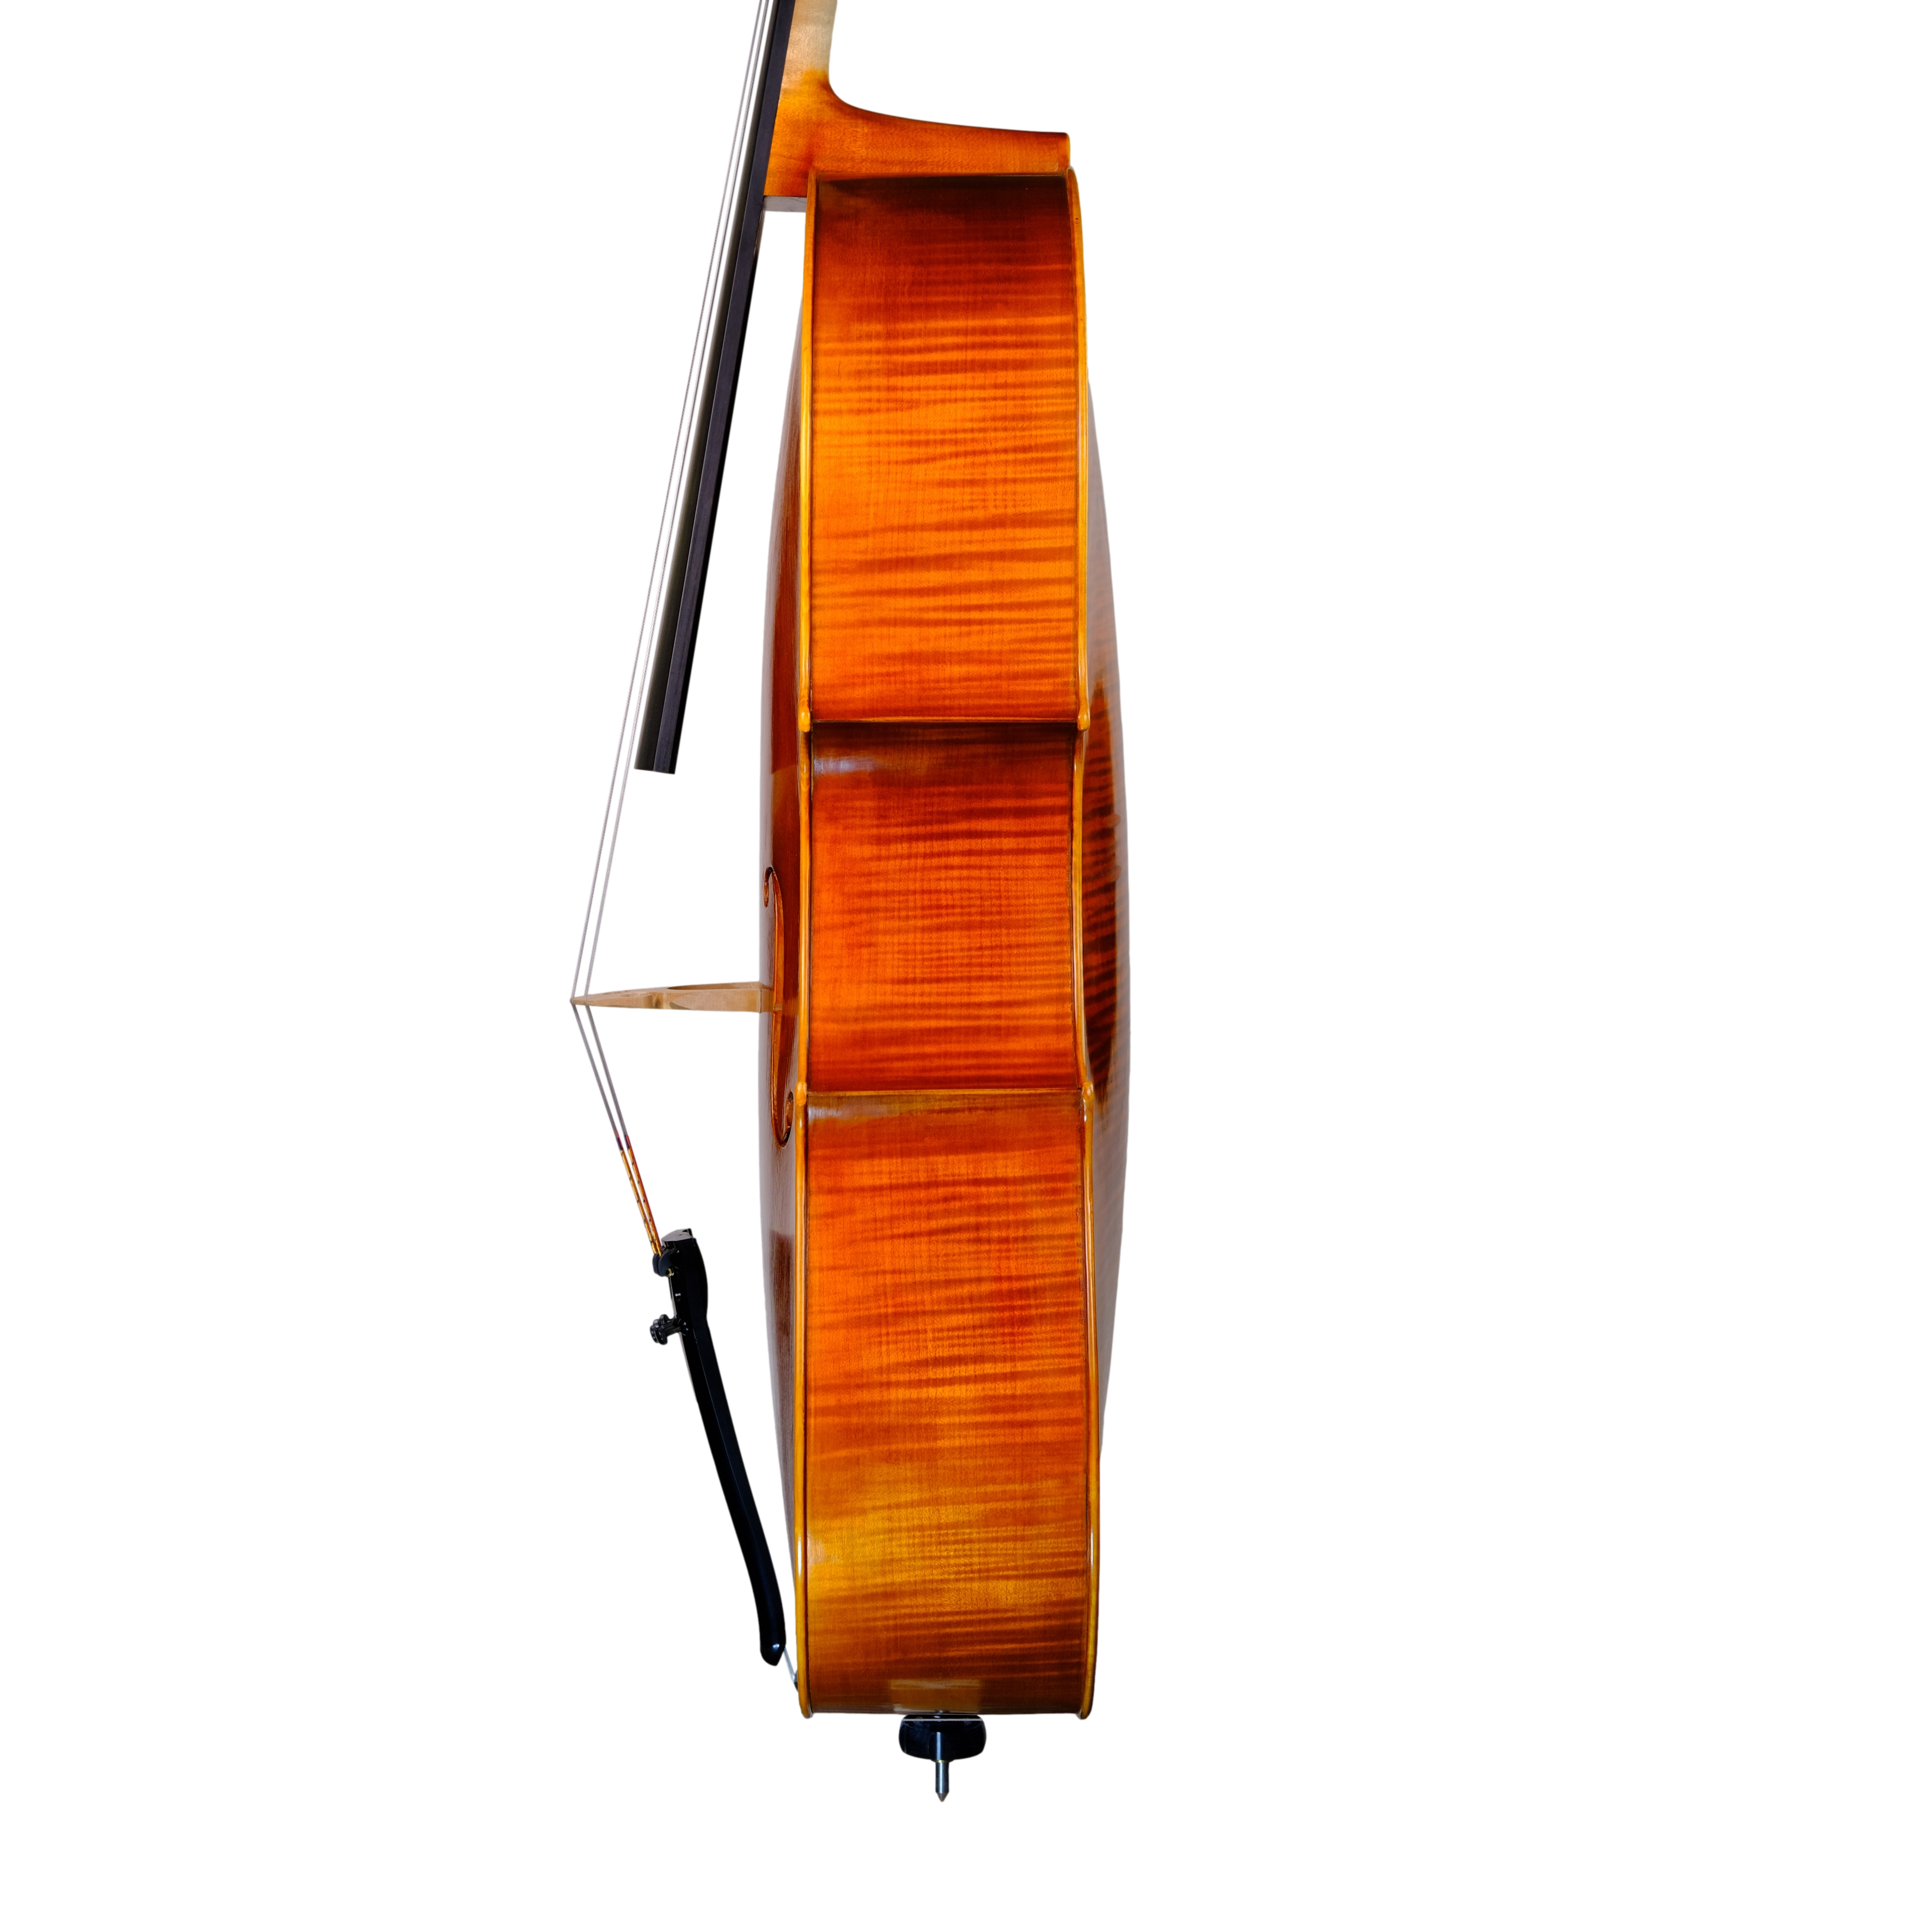 Cello - Linea Macchi, Domenico Montagnana "Sleeping Beauty", Cremona 2022